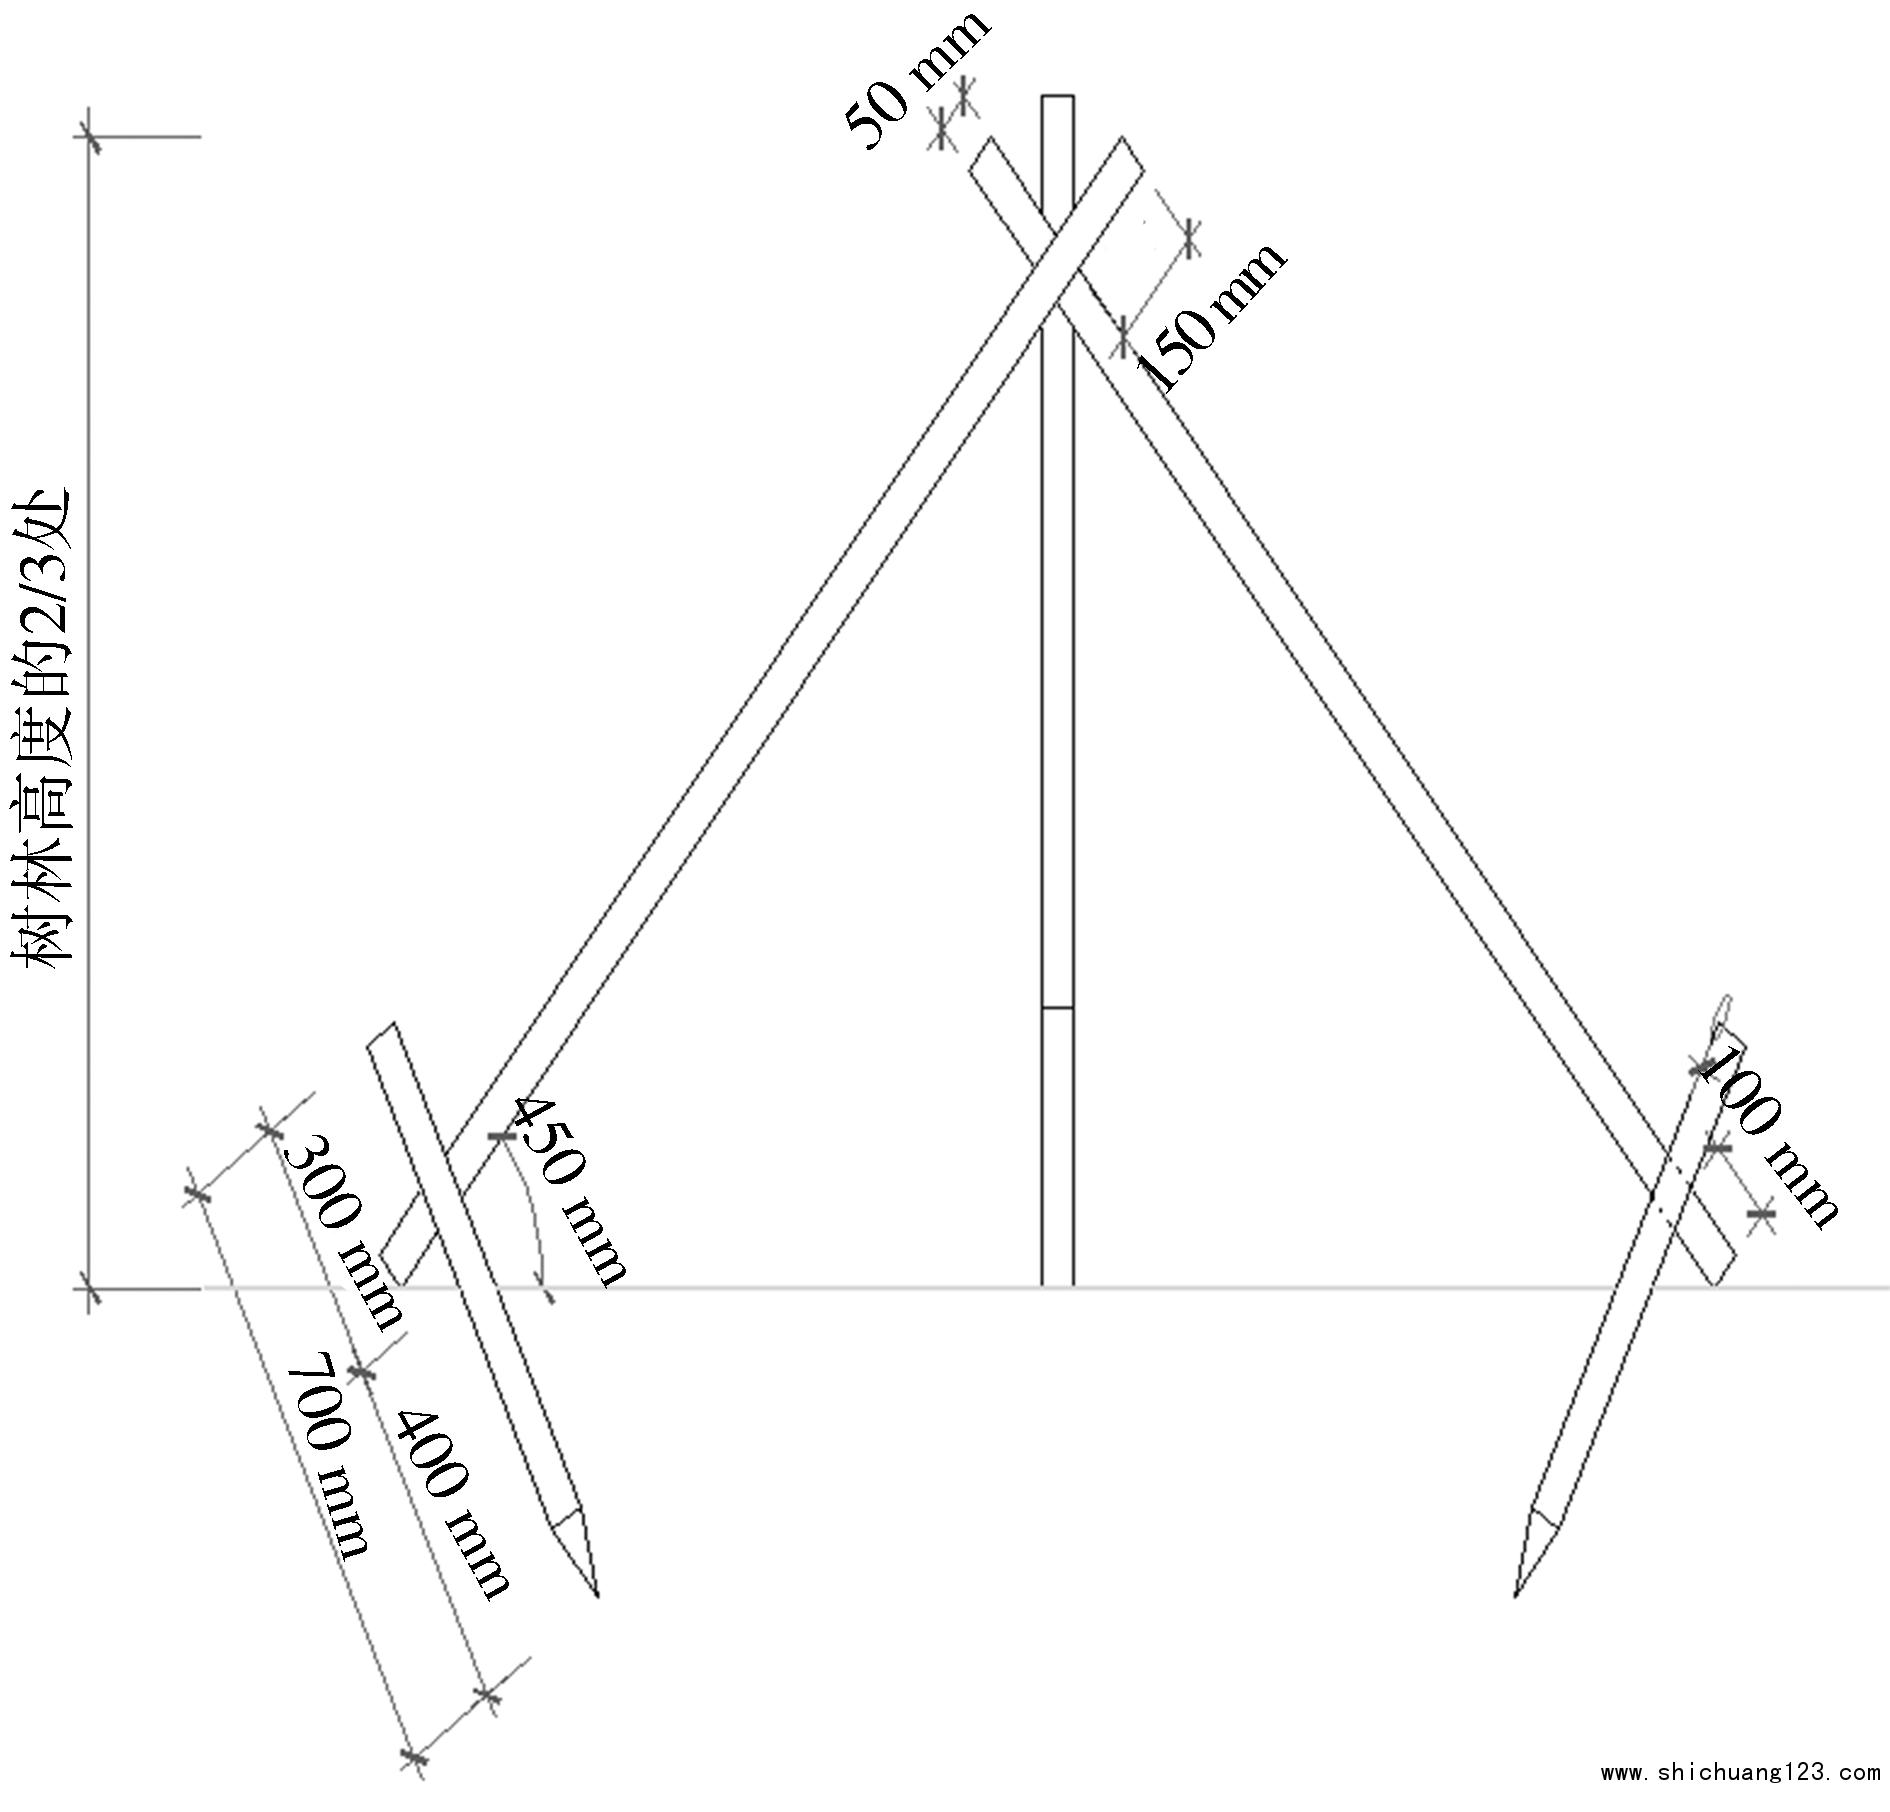 06sg5172免费下载-06SG517-2轻型屋面三角形钢屋架(剖分T型钢)图集pdf格式【高清电子版】-东坡下载